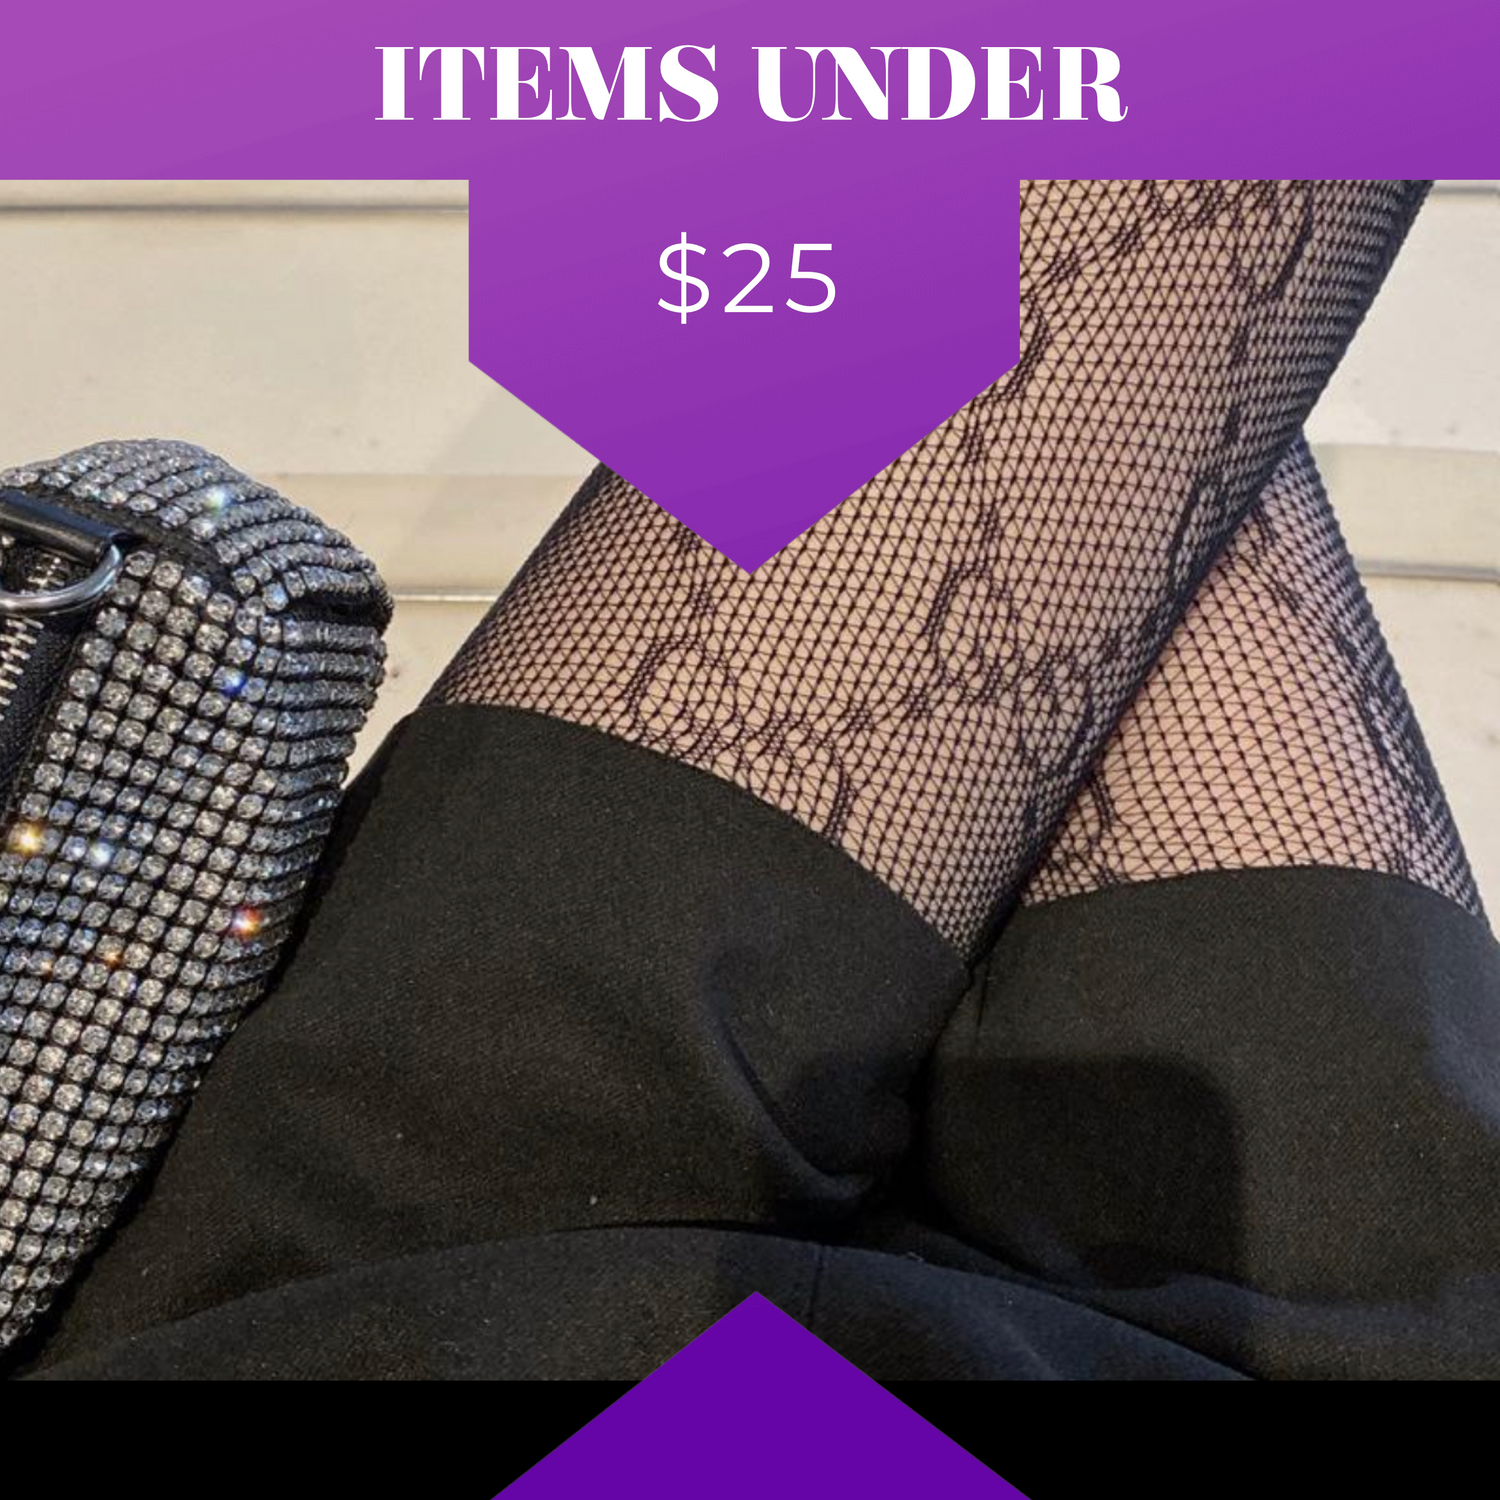 Shop Items under $25